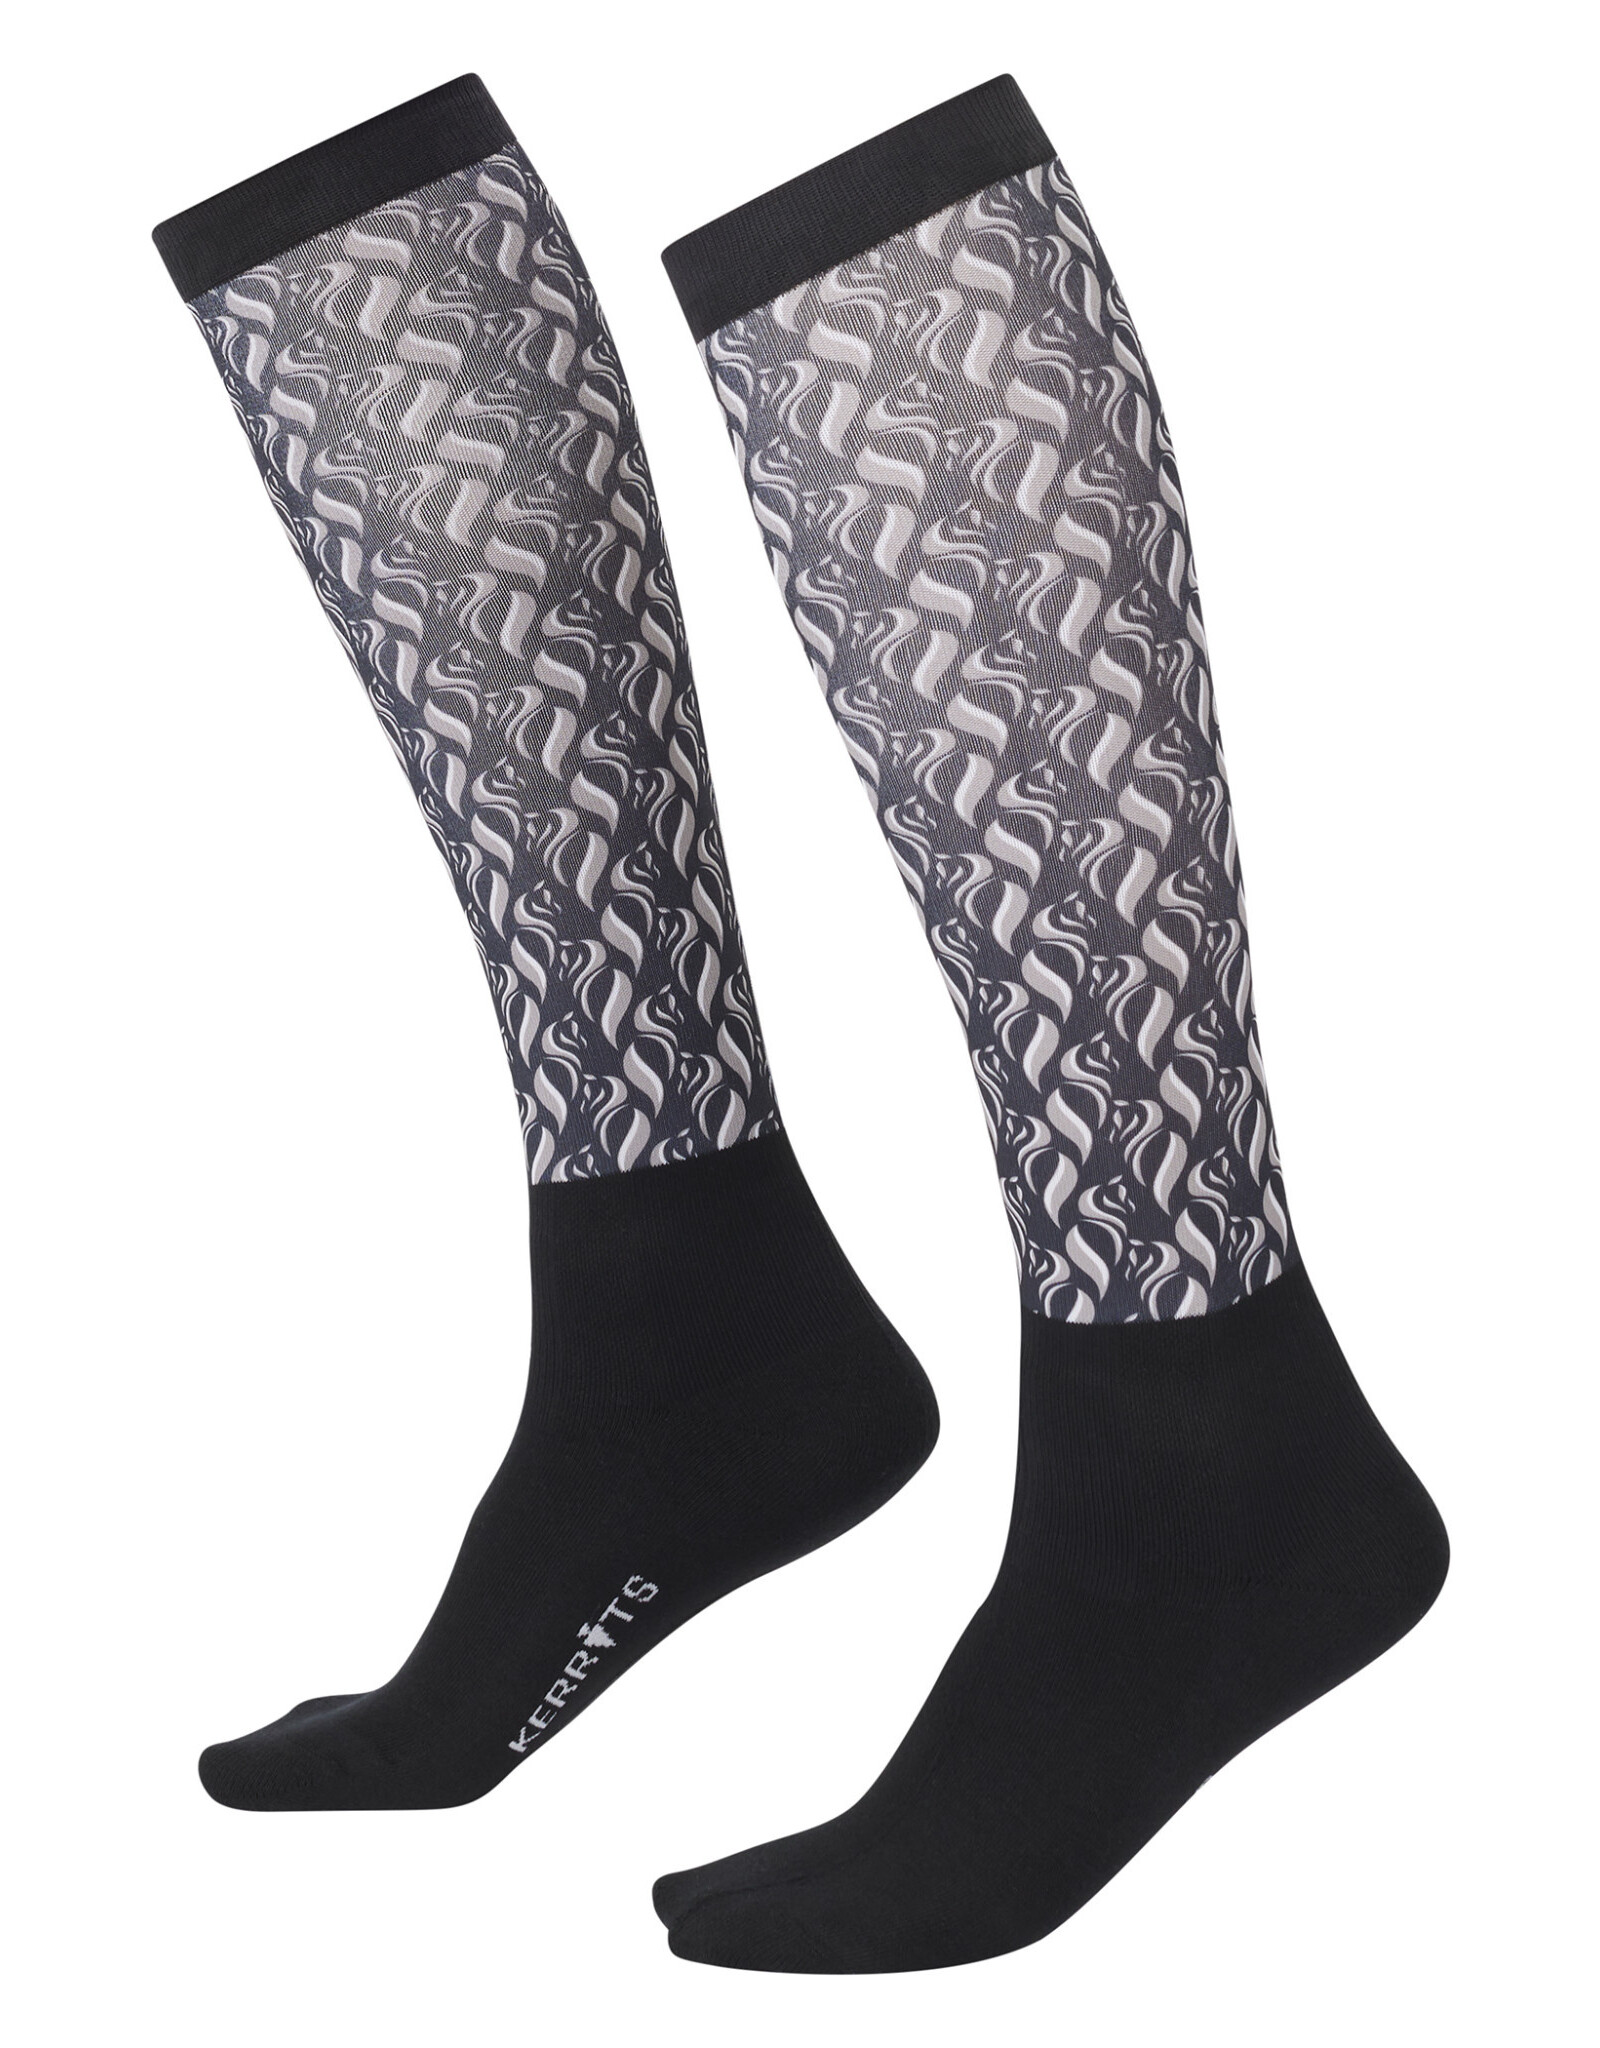 Kerrits Dual Zone Boot Socks Print